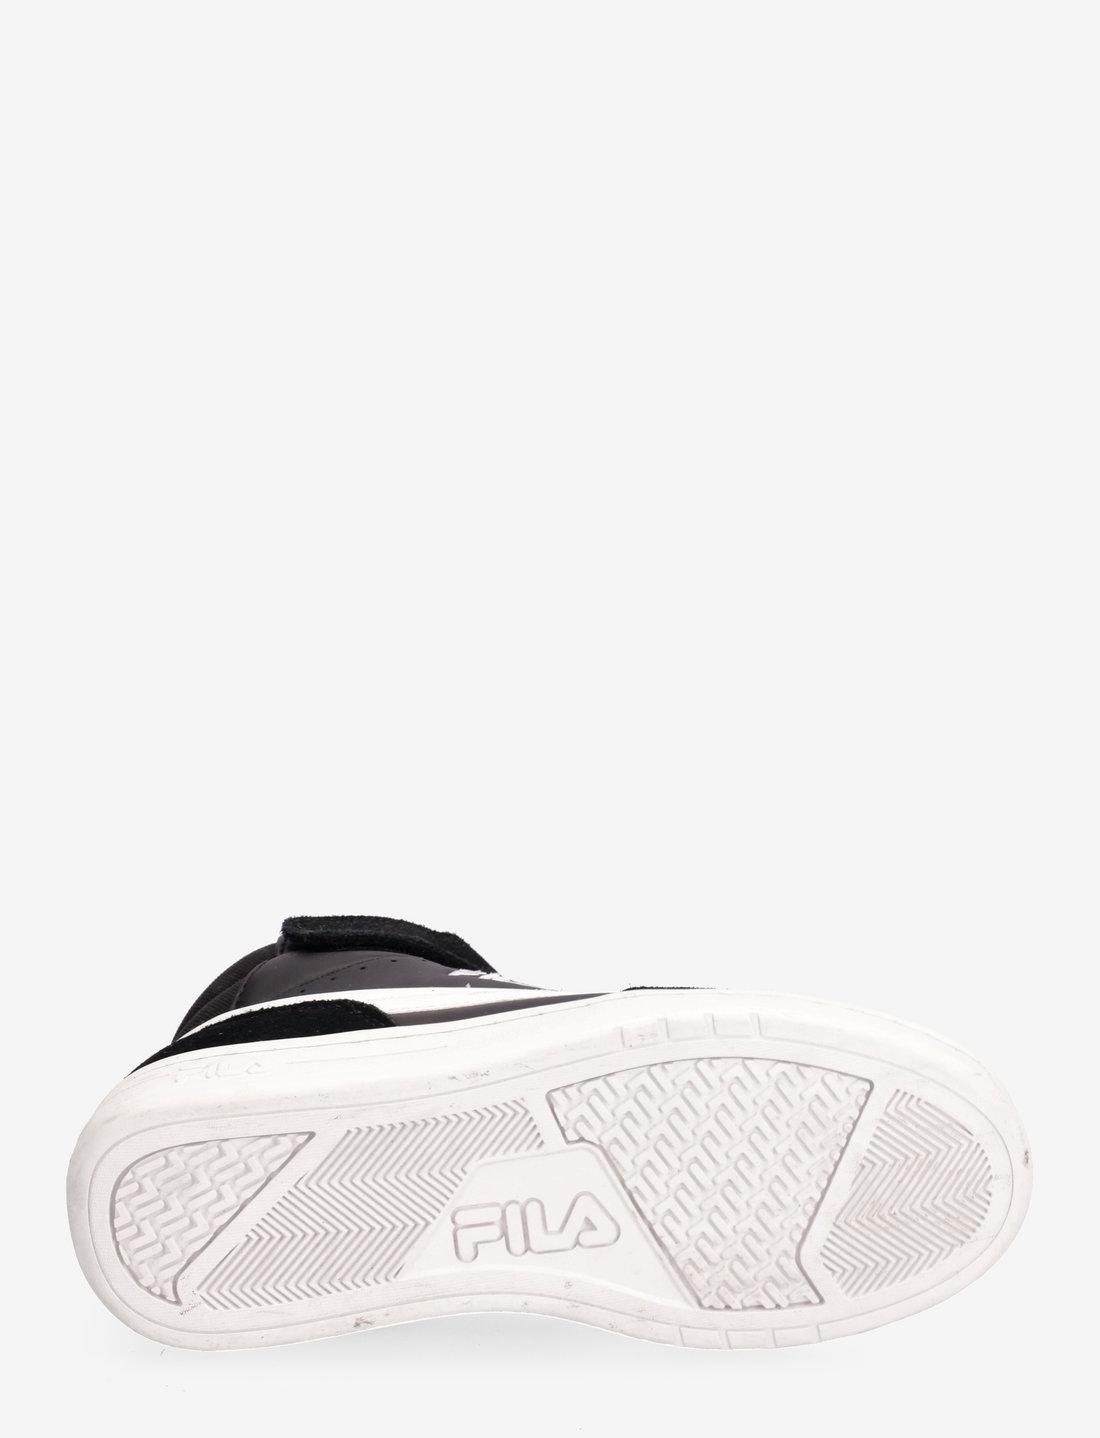 FILA Fila Crew Velcro Mid Kids - Hoog sneakers